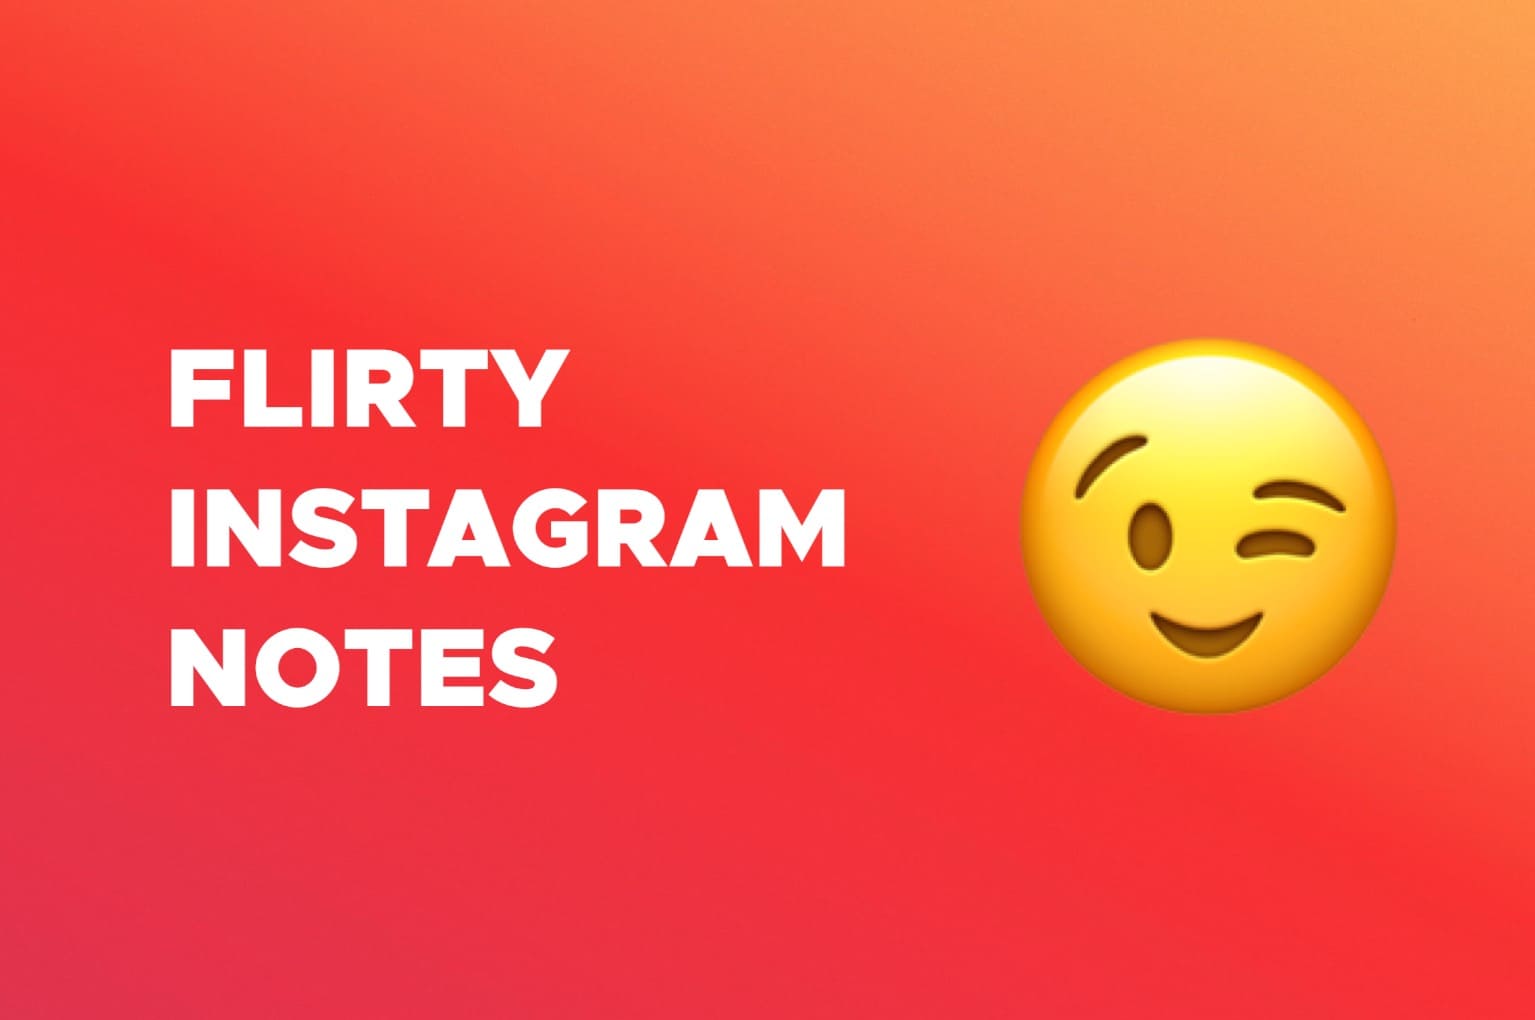 Best flirty Instagram notes